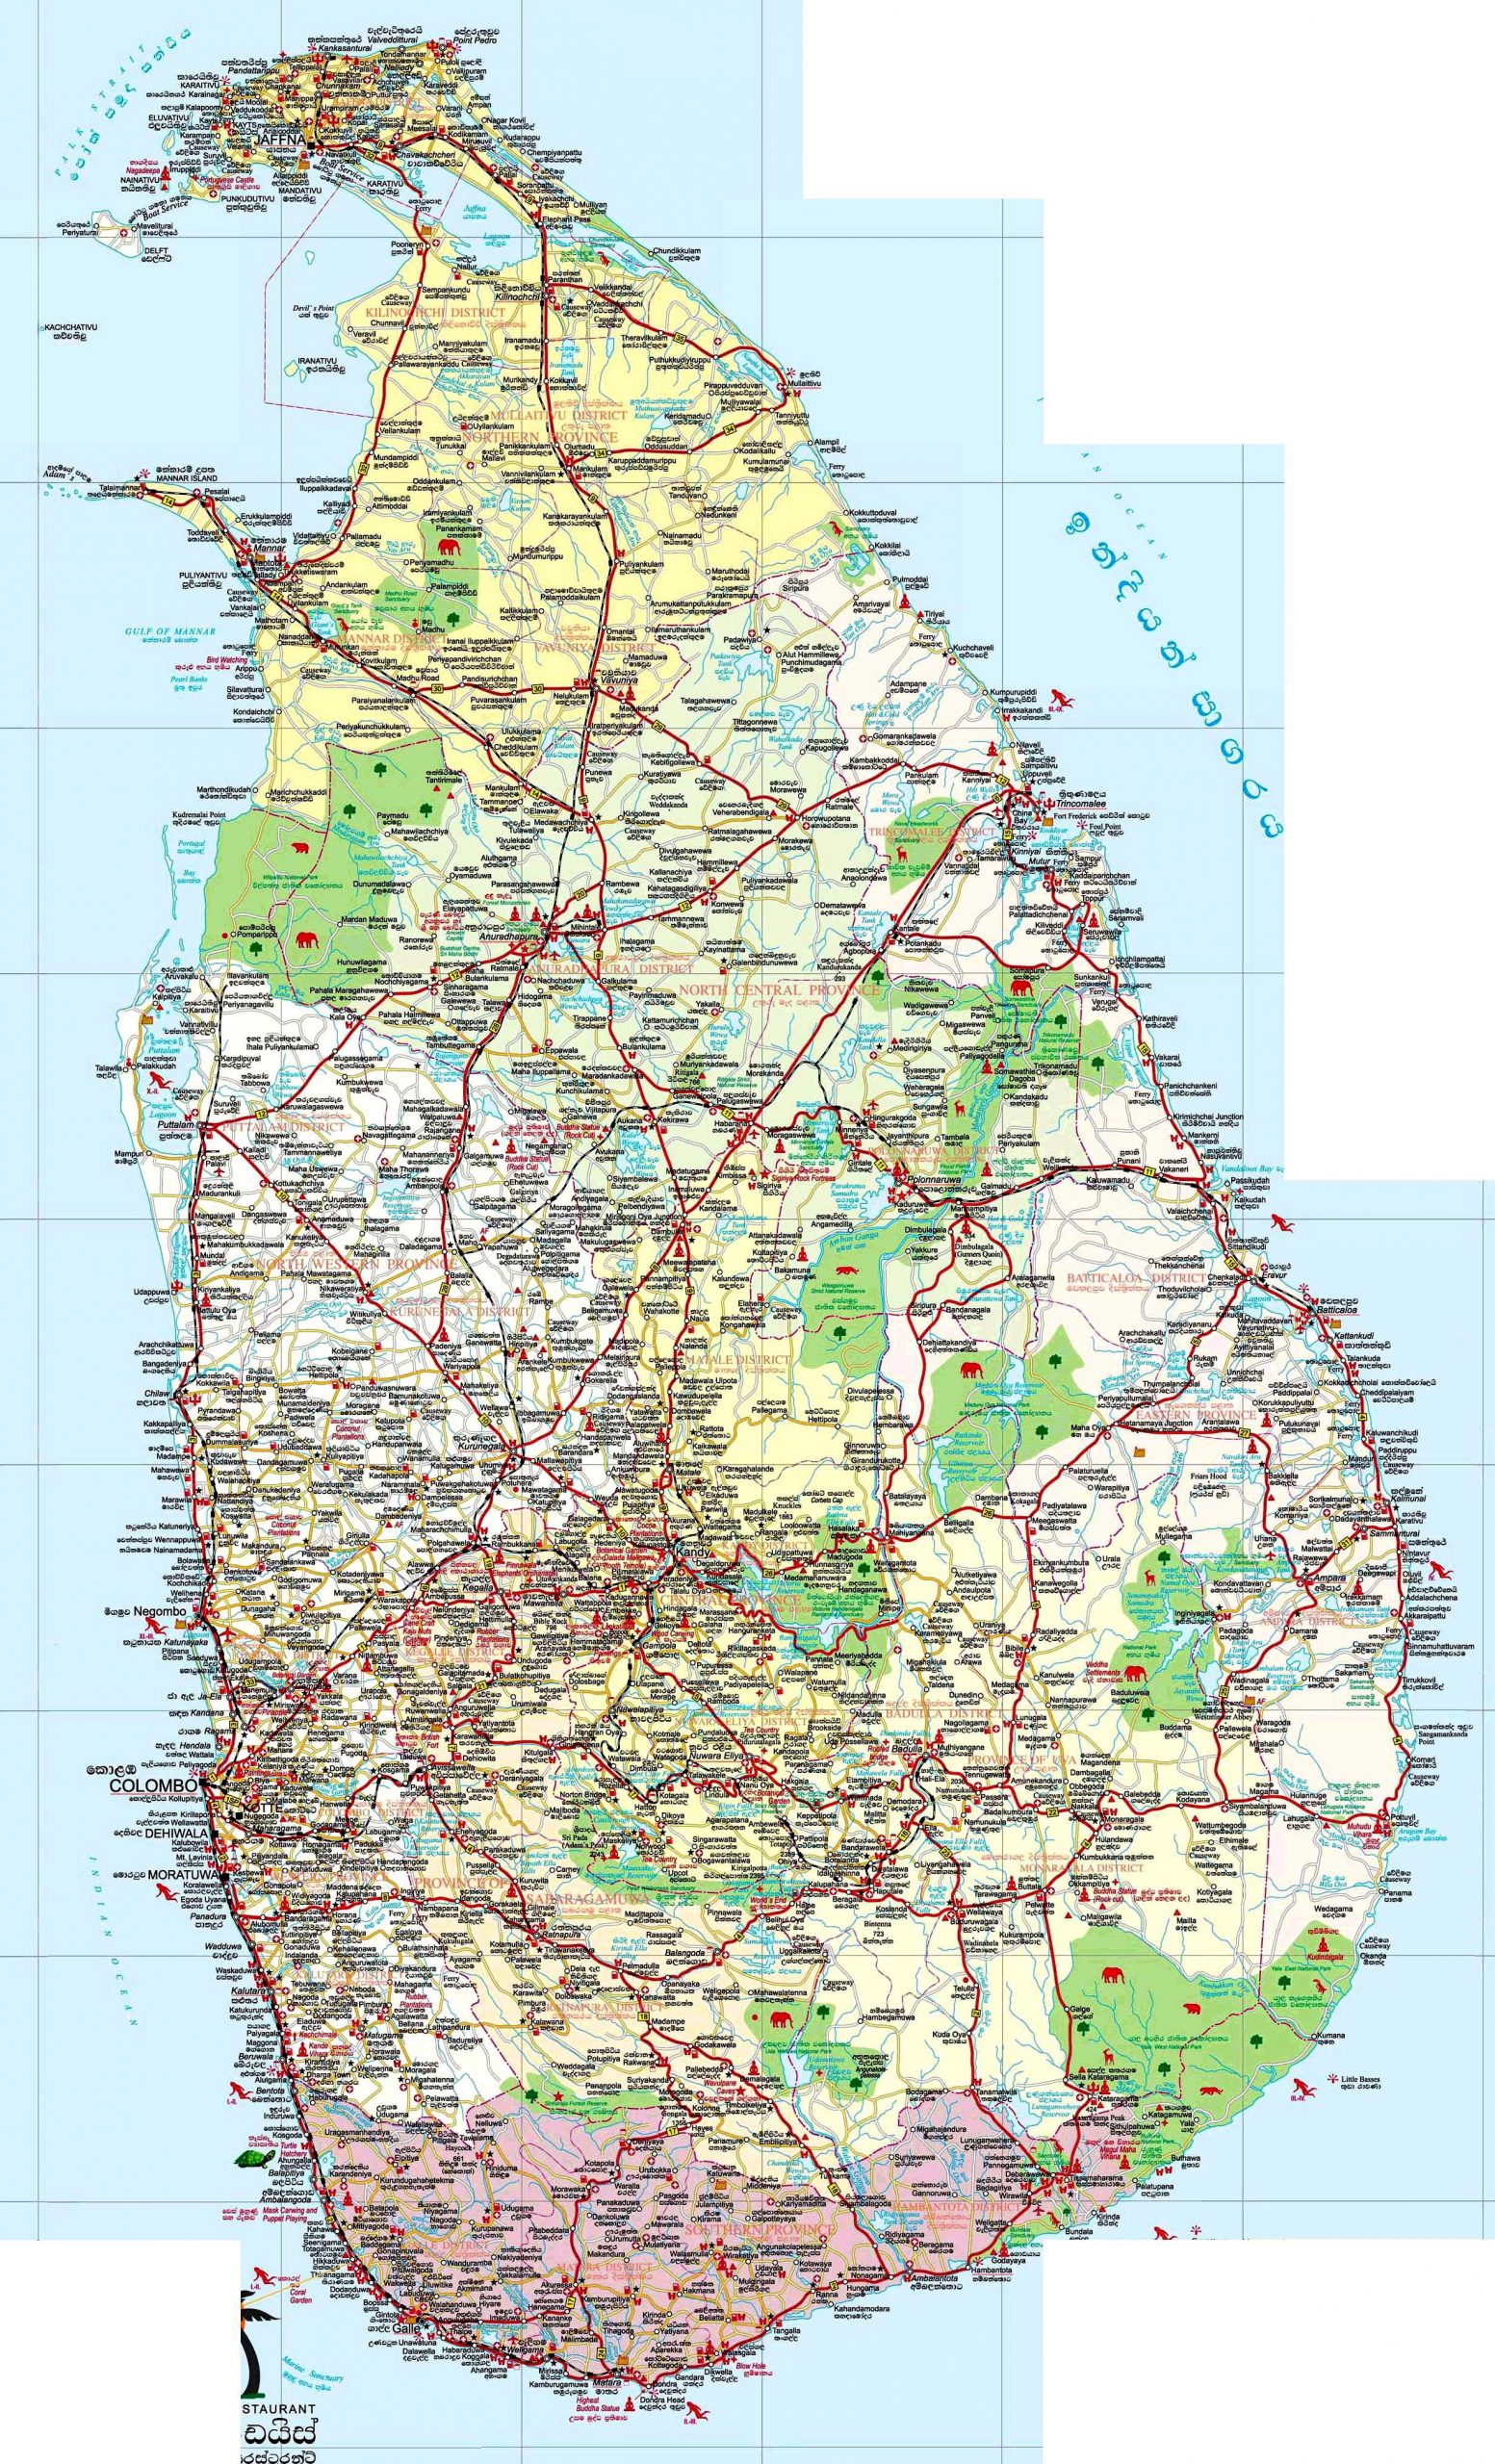 Sri Lanka Maps Printable Maps Of Sri Lanka For Download